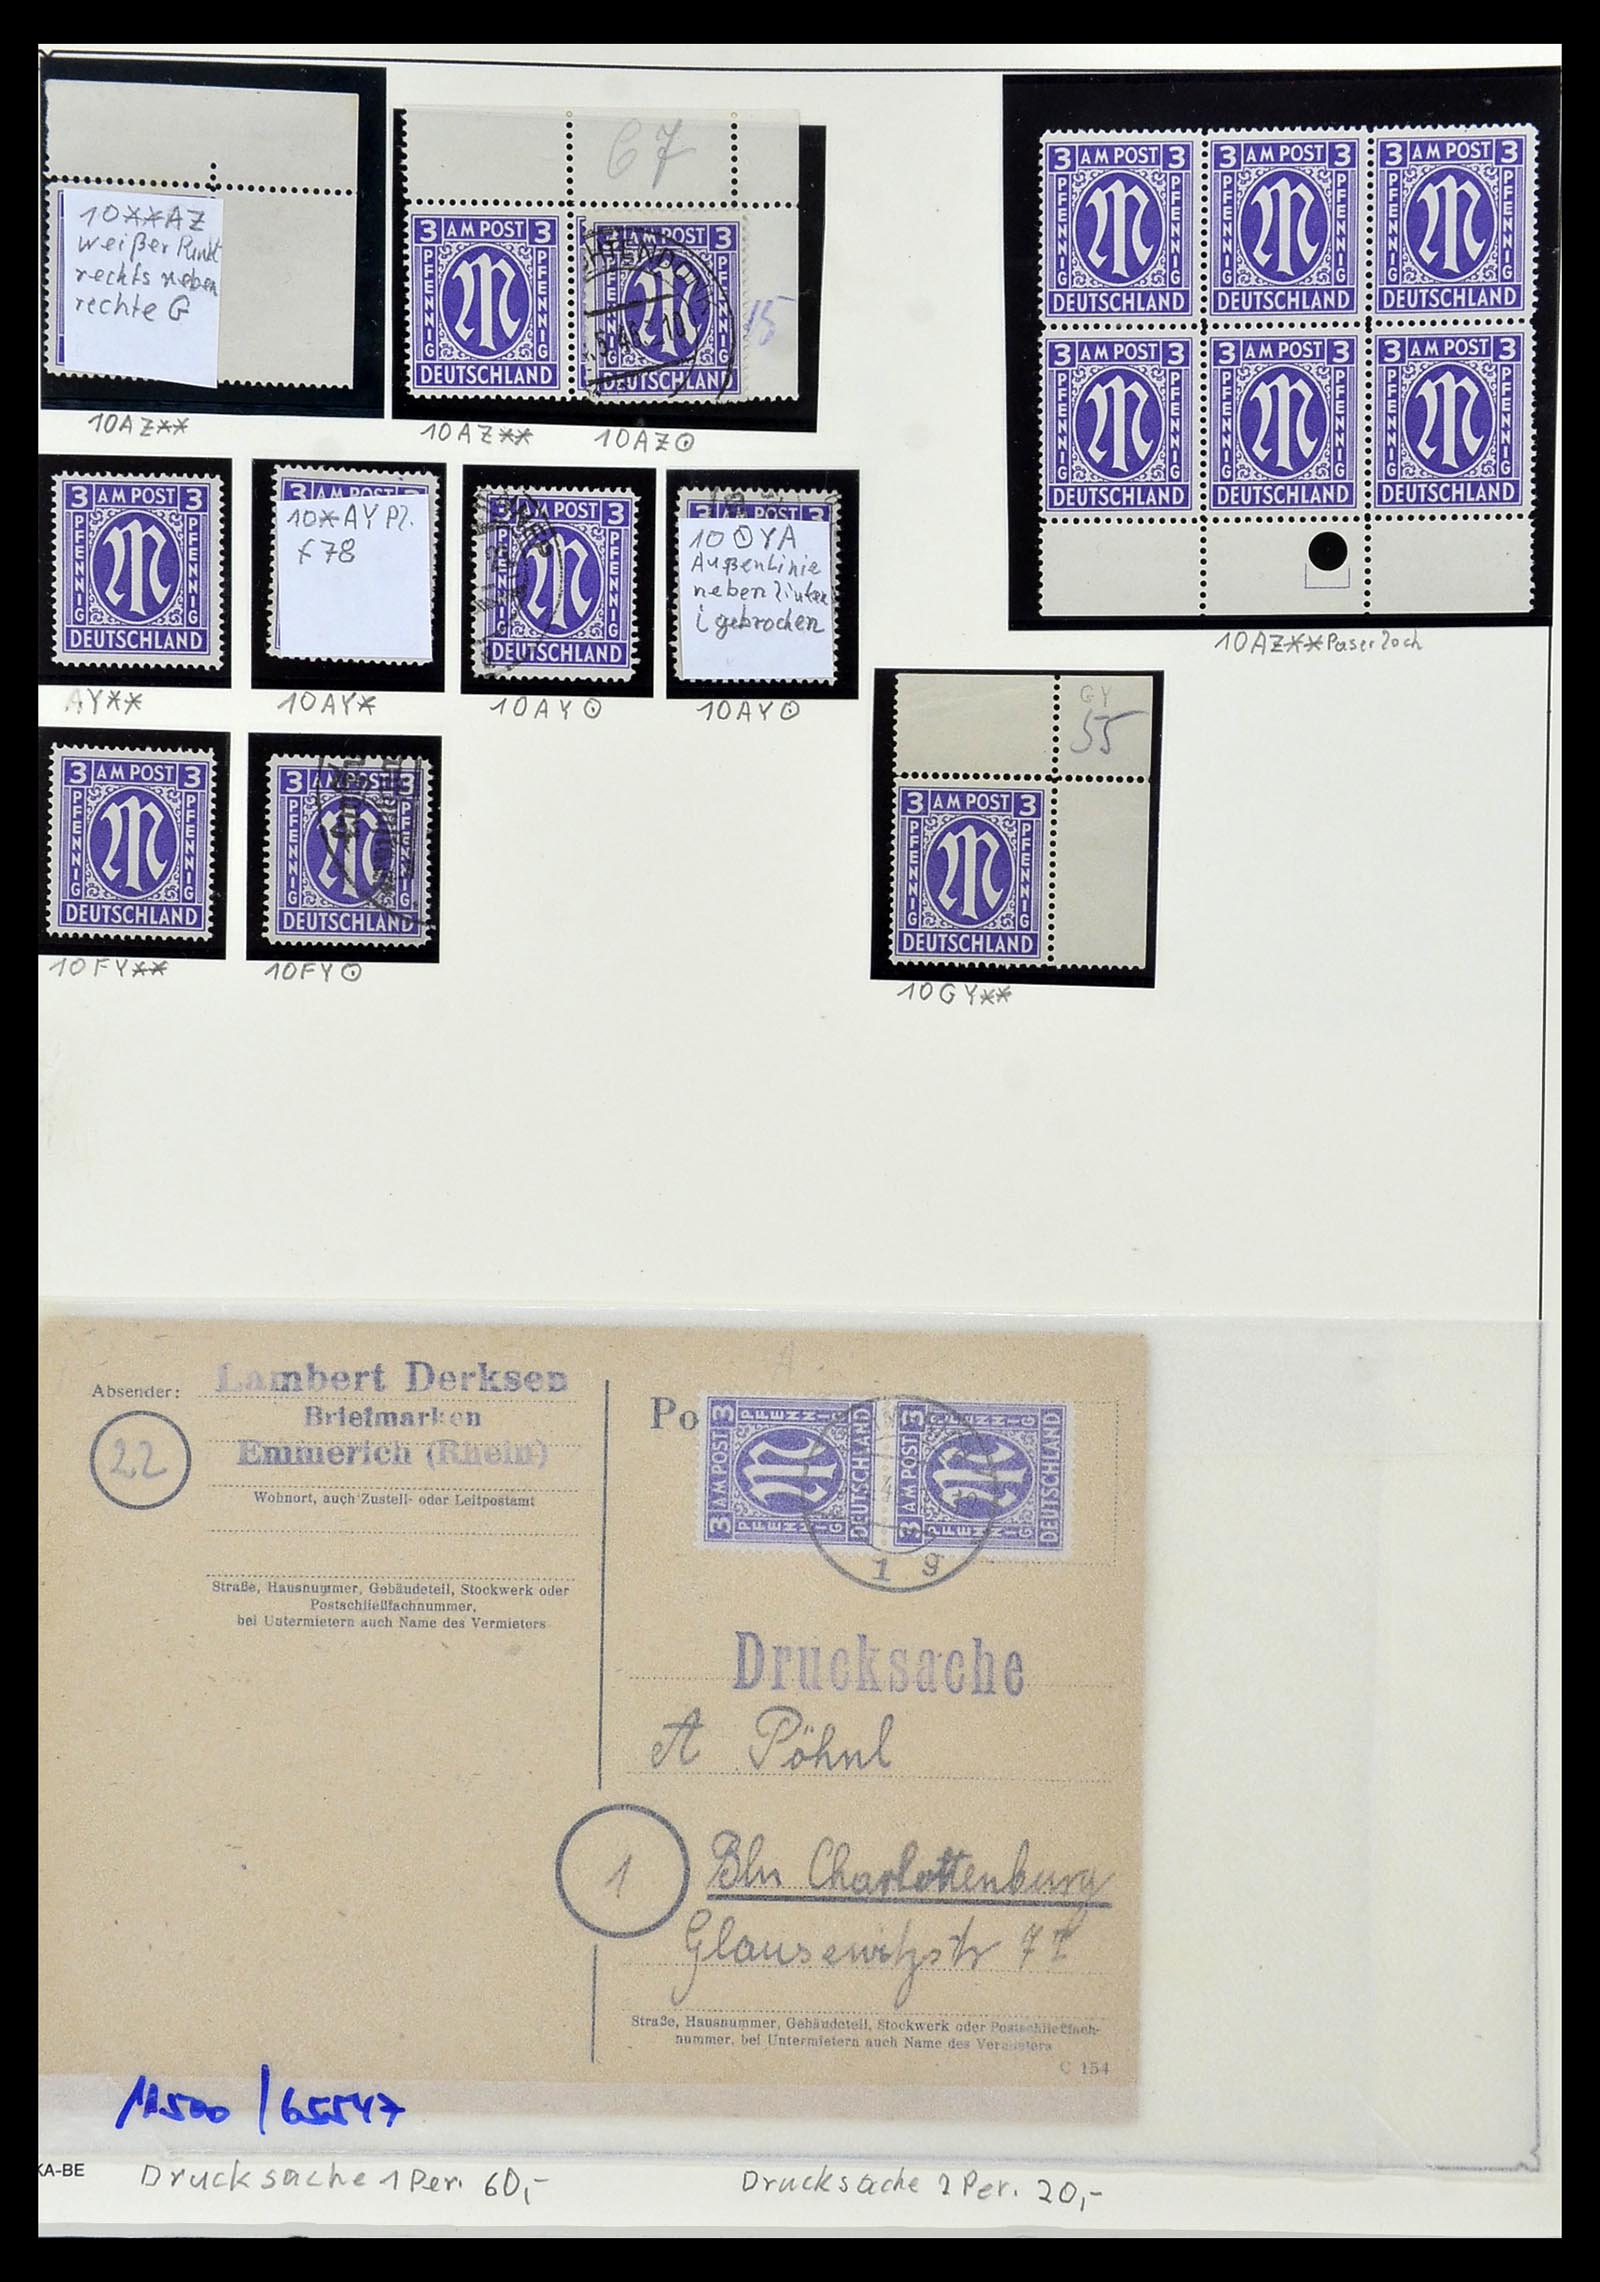 34152 035 - Stamp collection 34152 German Zones 1945-1949.